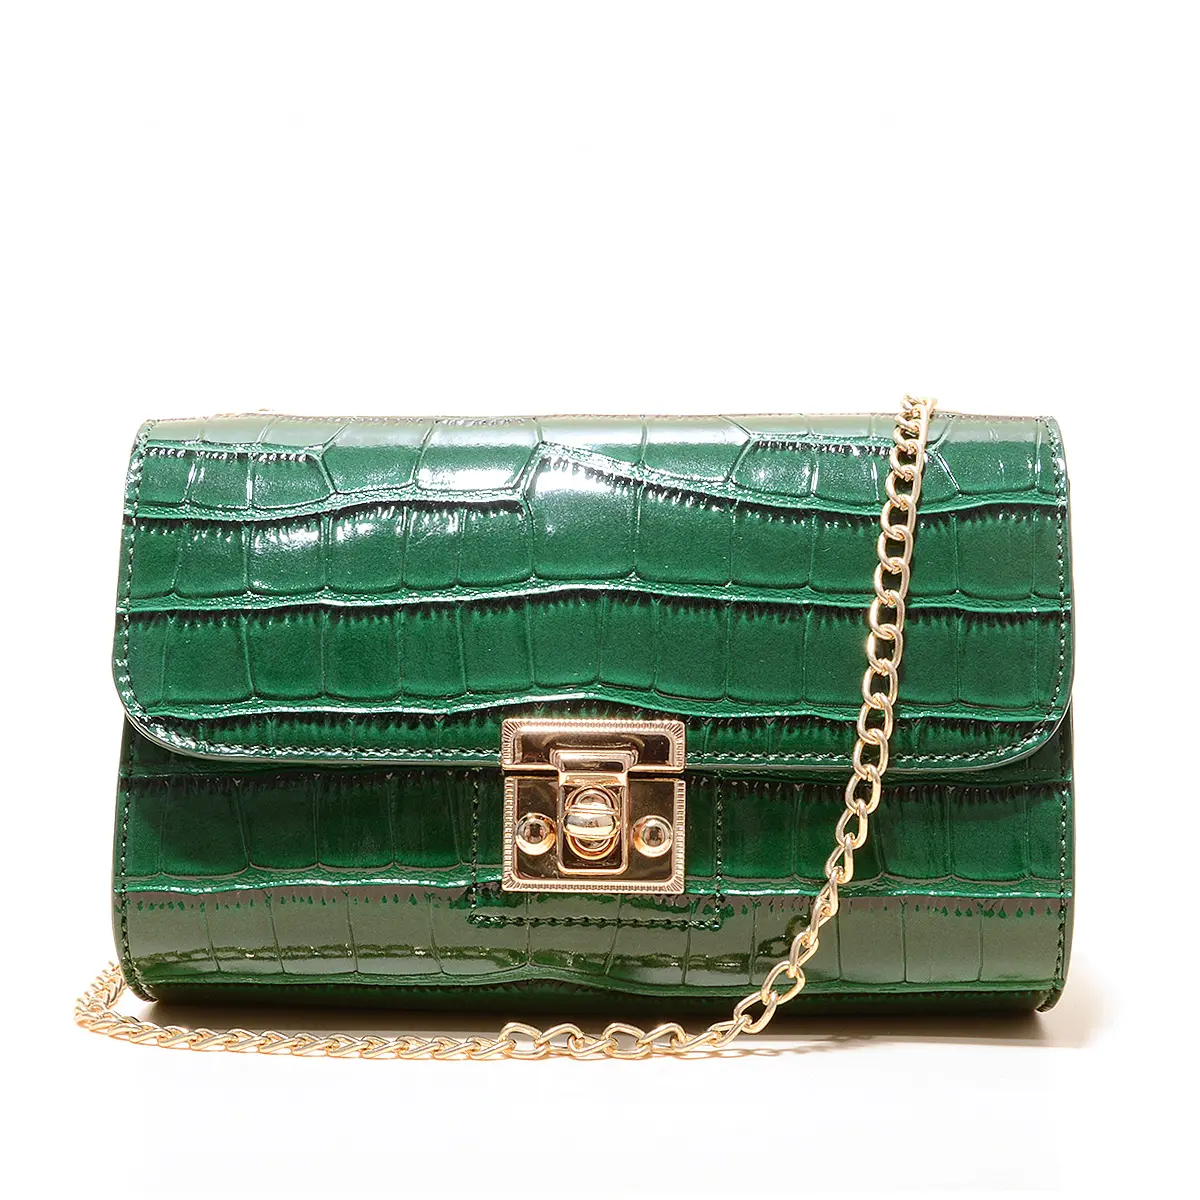 Premium Quality Luxury Leather Designer Purse Handbags for Women New Designer Crocodile PU Leather Branded Tote Bags